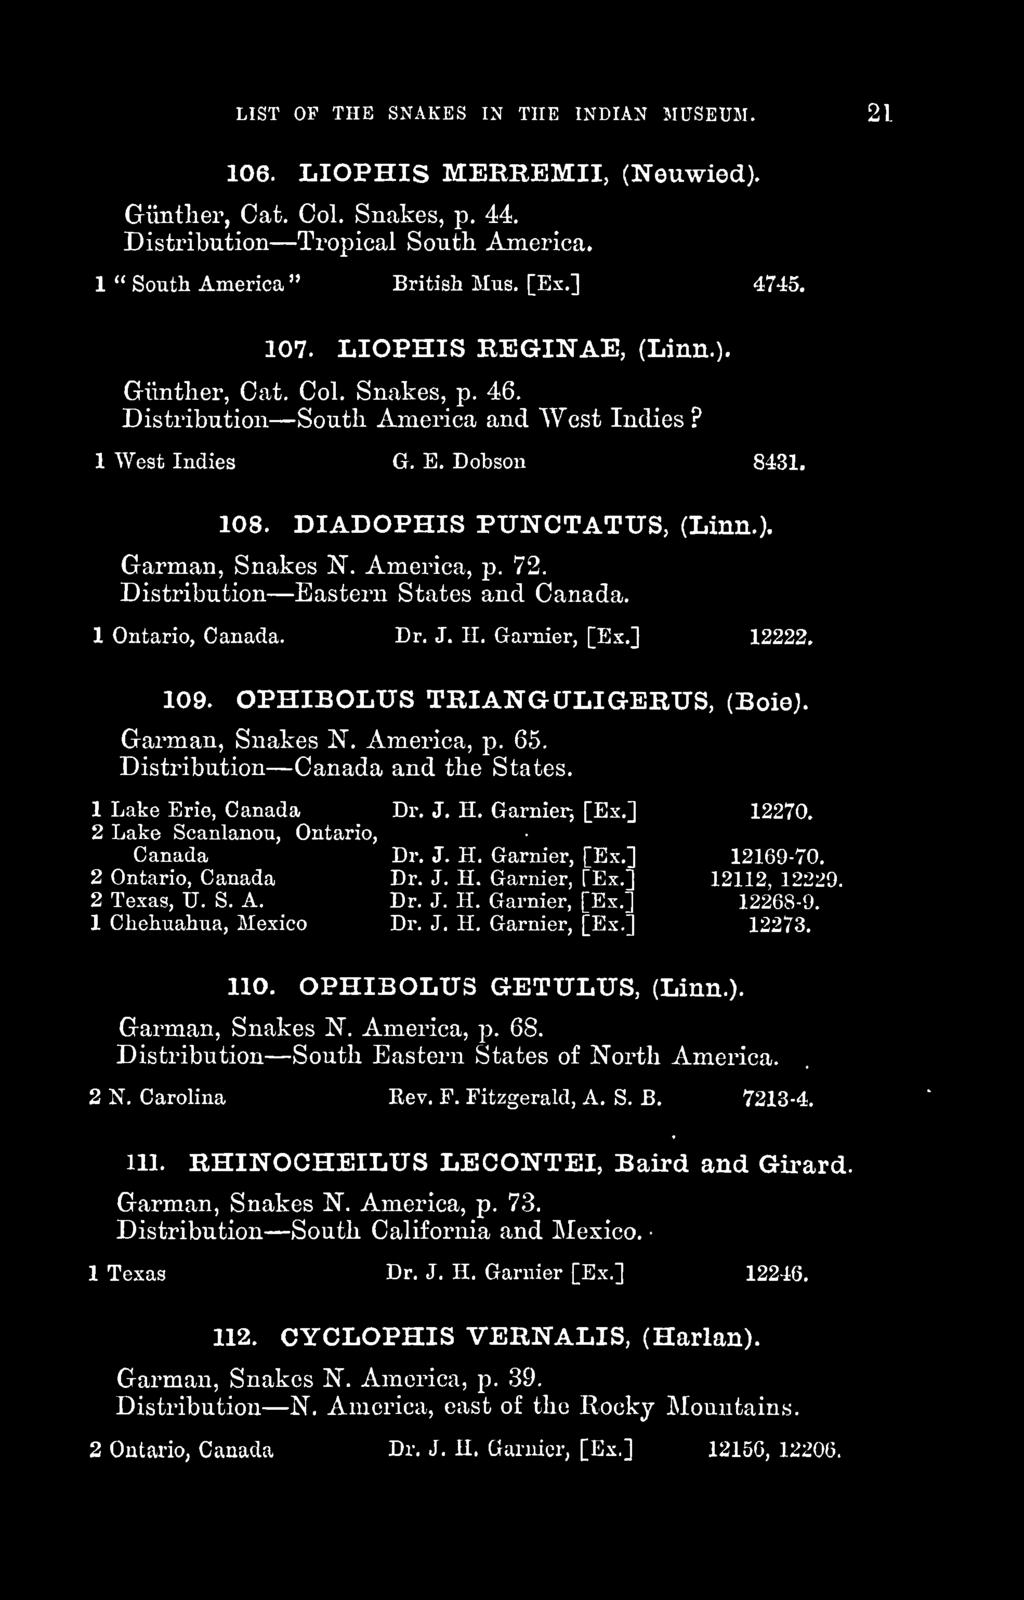 America, p. 72. Distribution Eastern States and Canada. 1 Ontario, Canada. Dr. J. H. Garnier, [Ex.] 12222. 109. OPHIBOLUS TmANGCJLIGERUS, (Boie). Garman, Snakes N. America, p. 65.